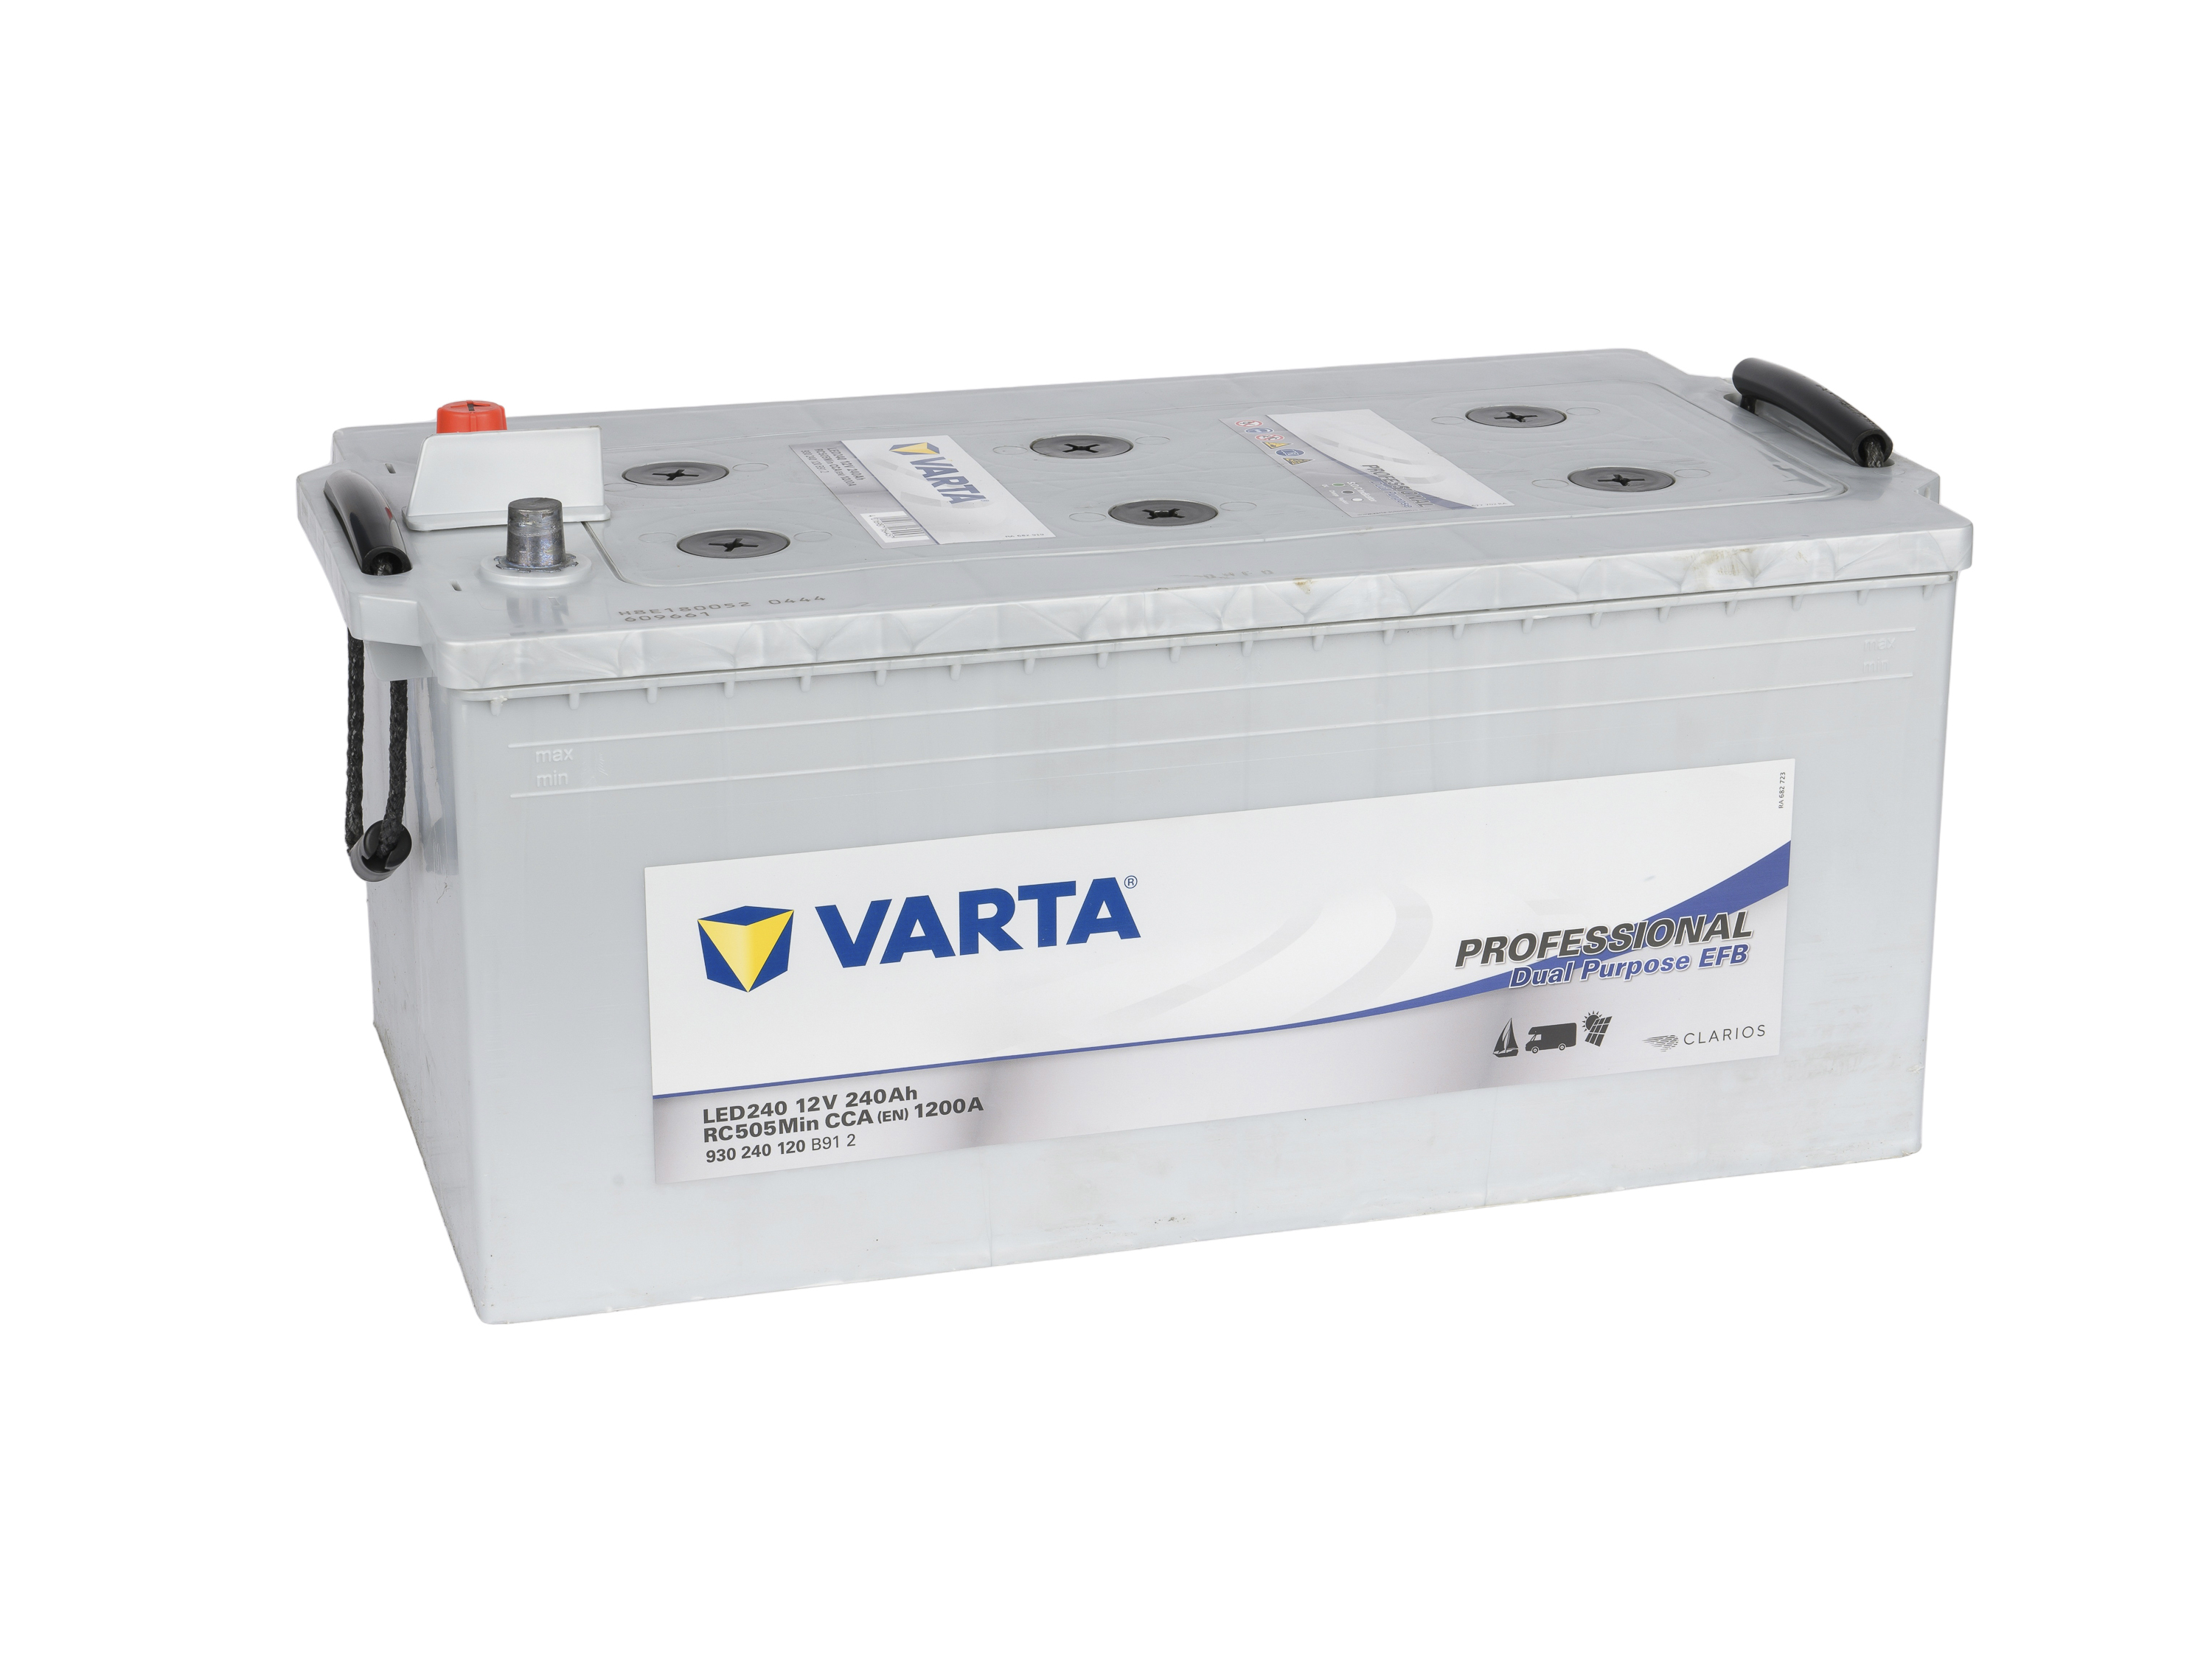 VARTA batteri Dual Purpose LED240 12V/240Ah 930.240.120